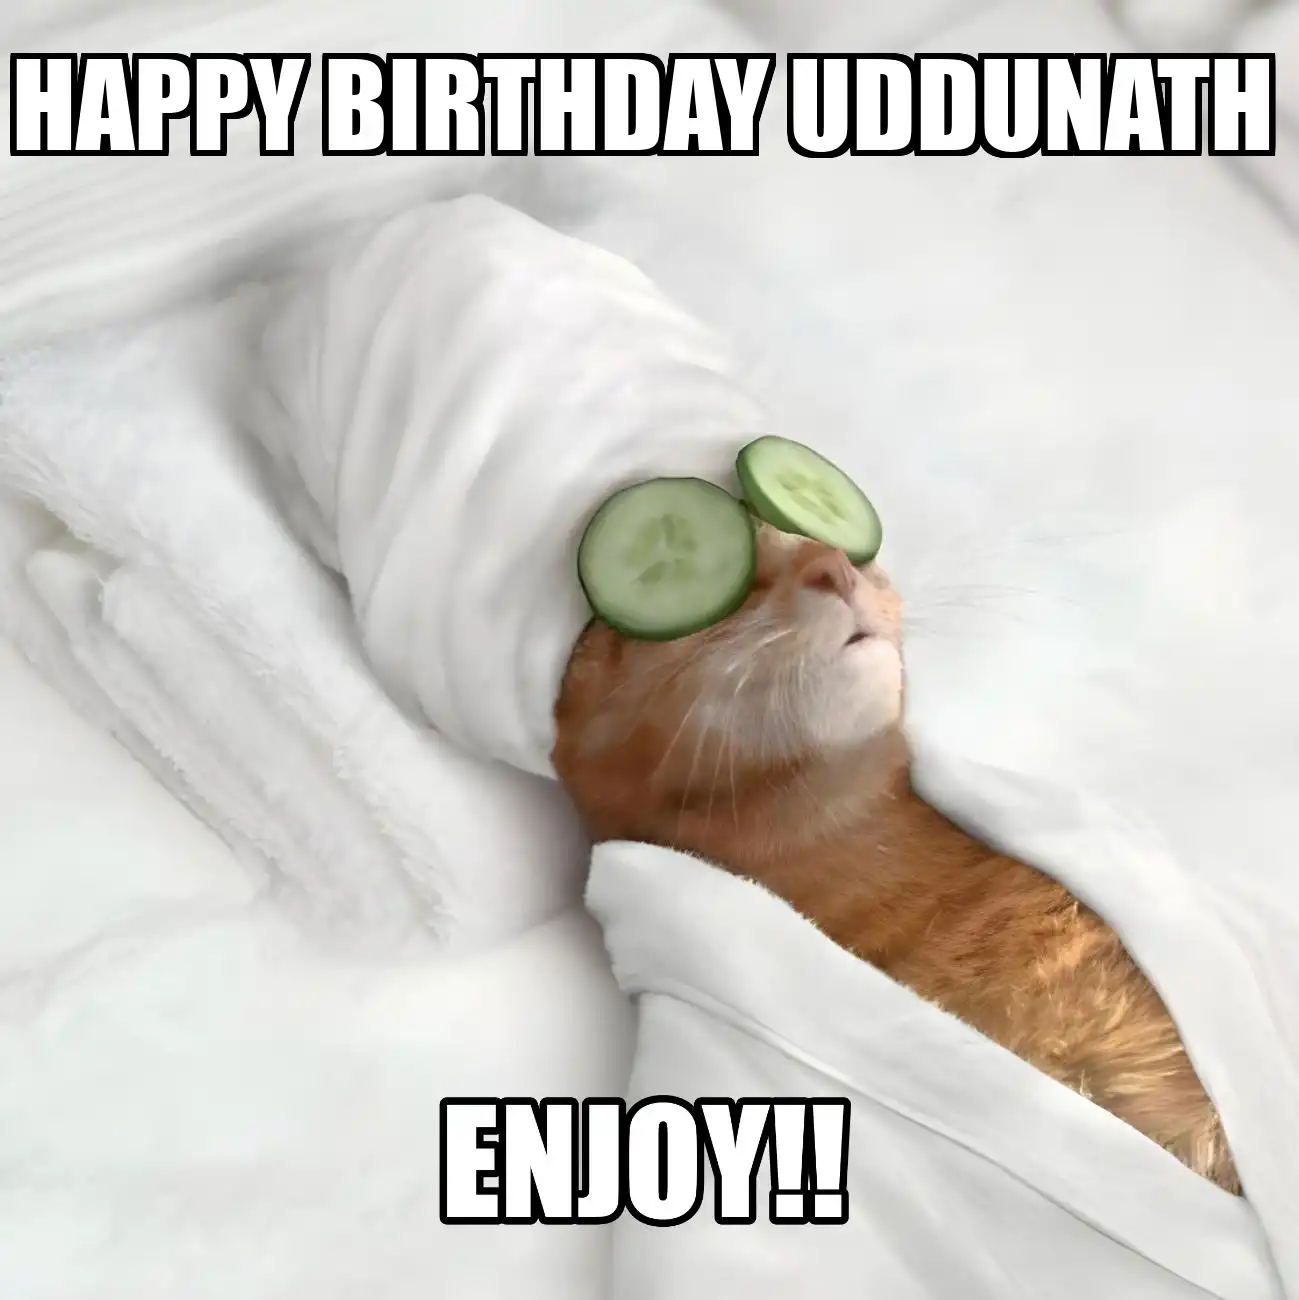 Happy Birthday Uddunath Enjoy Cat Meme